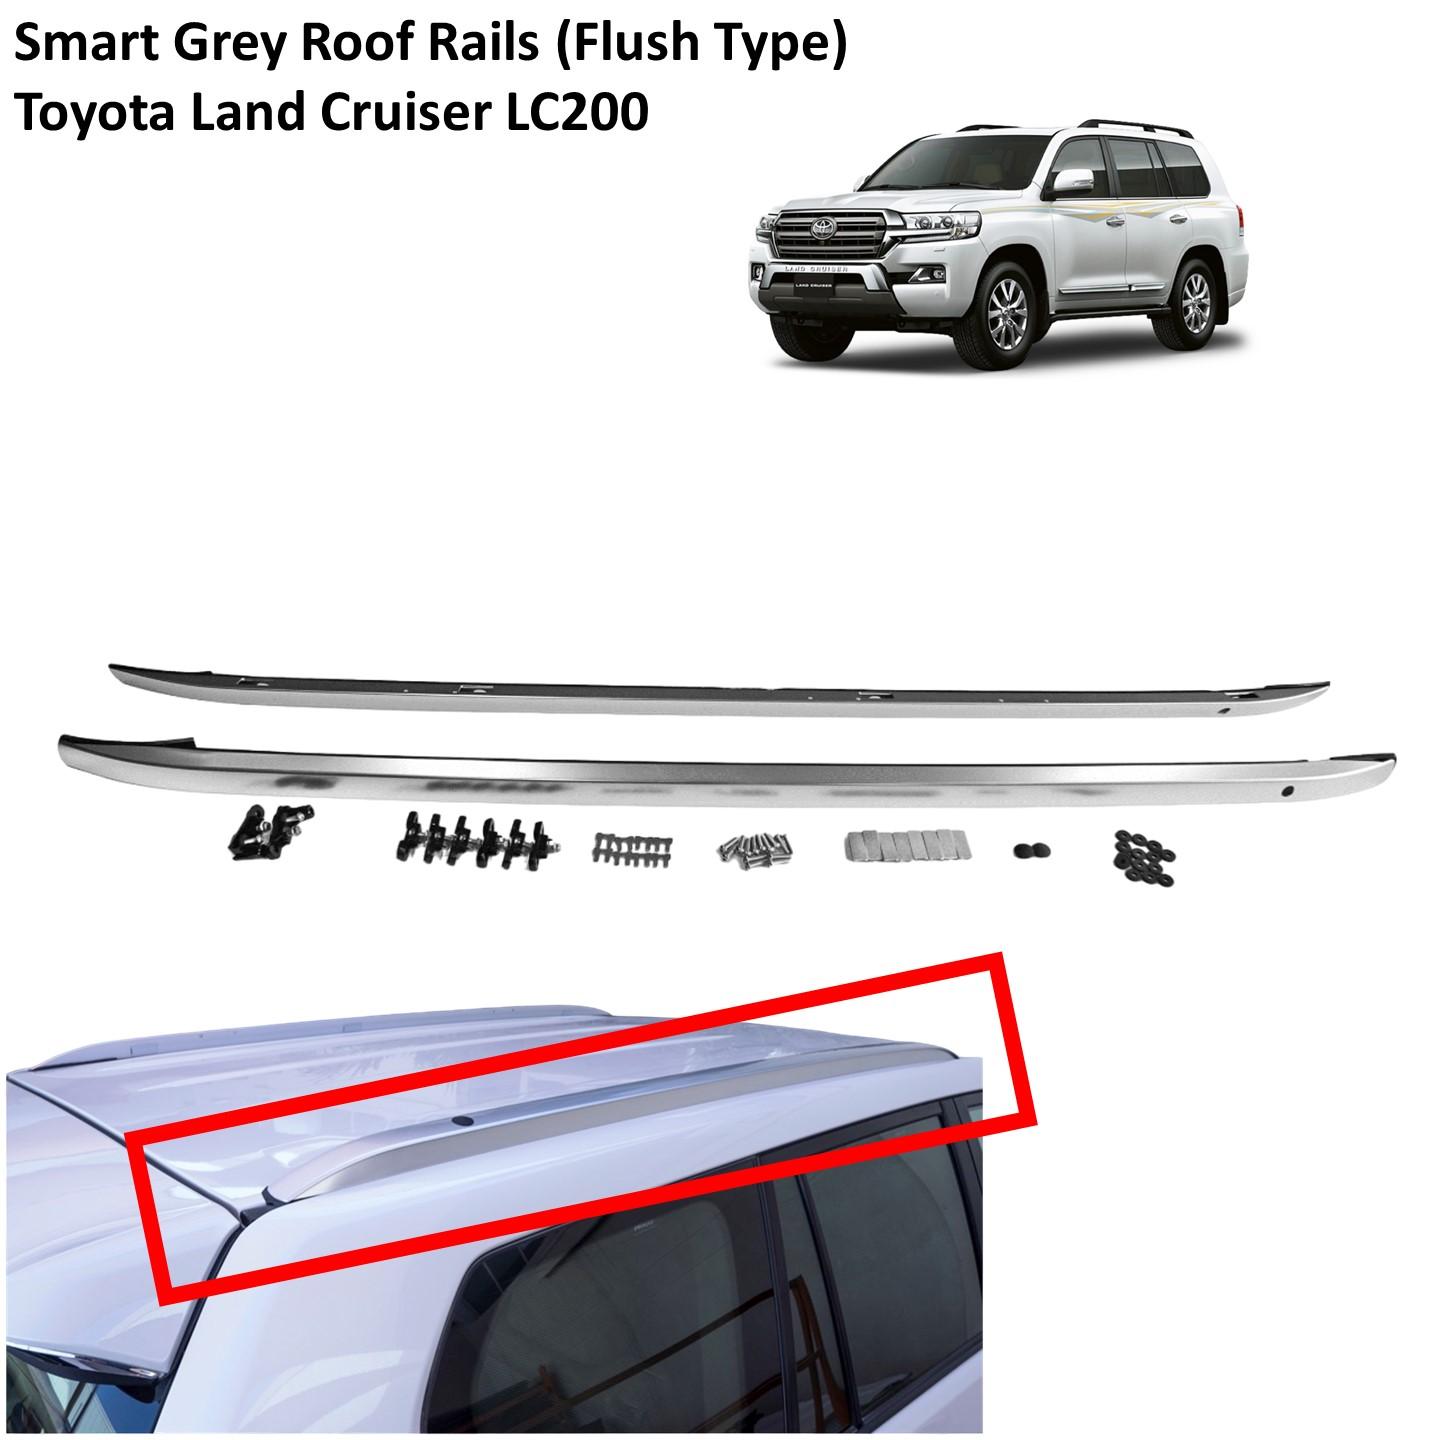 Smart Grey Roof Rails for Toyota Land Cruiser LC200 (Flush Type)